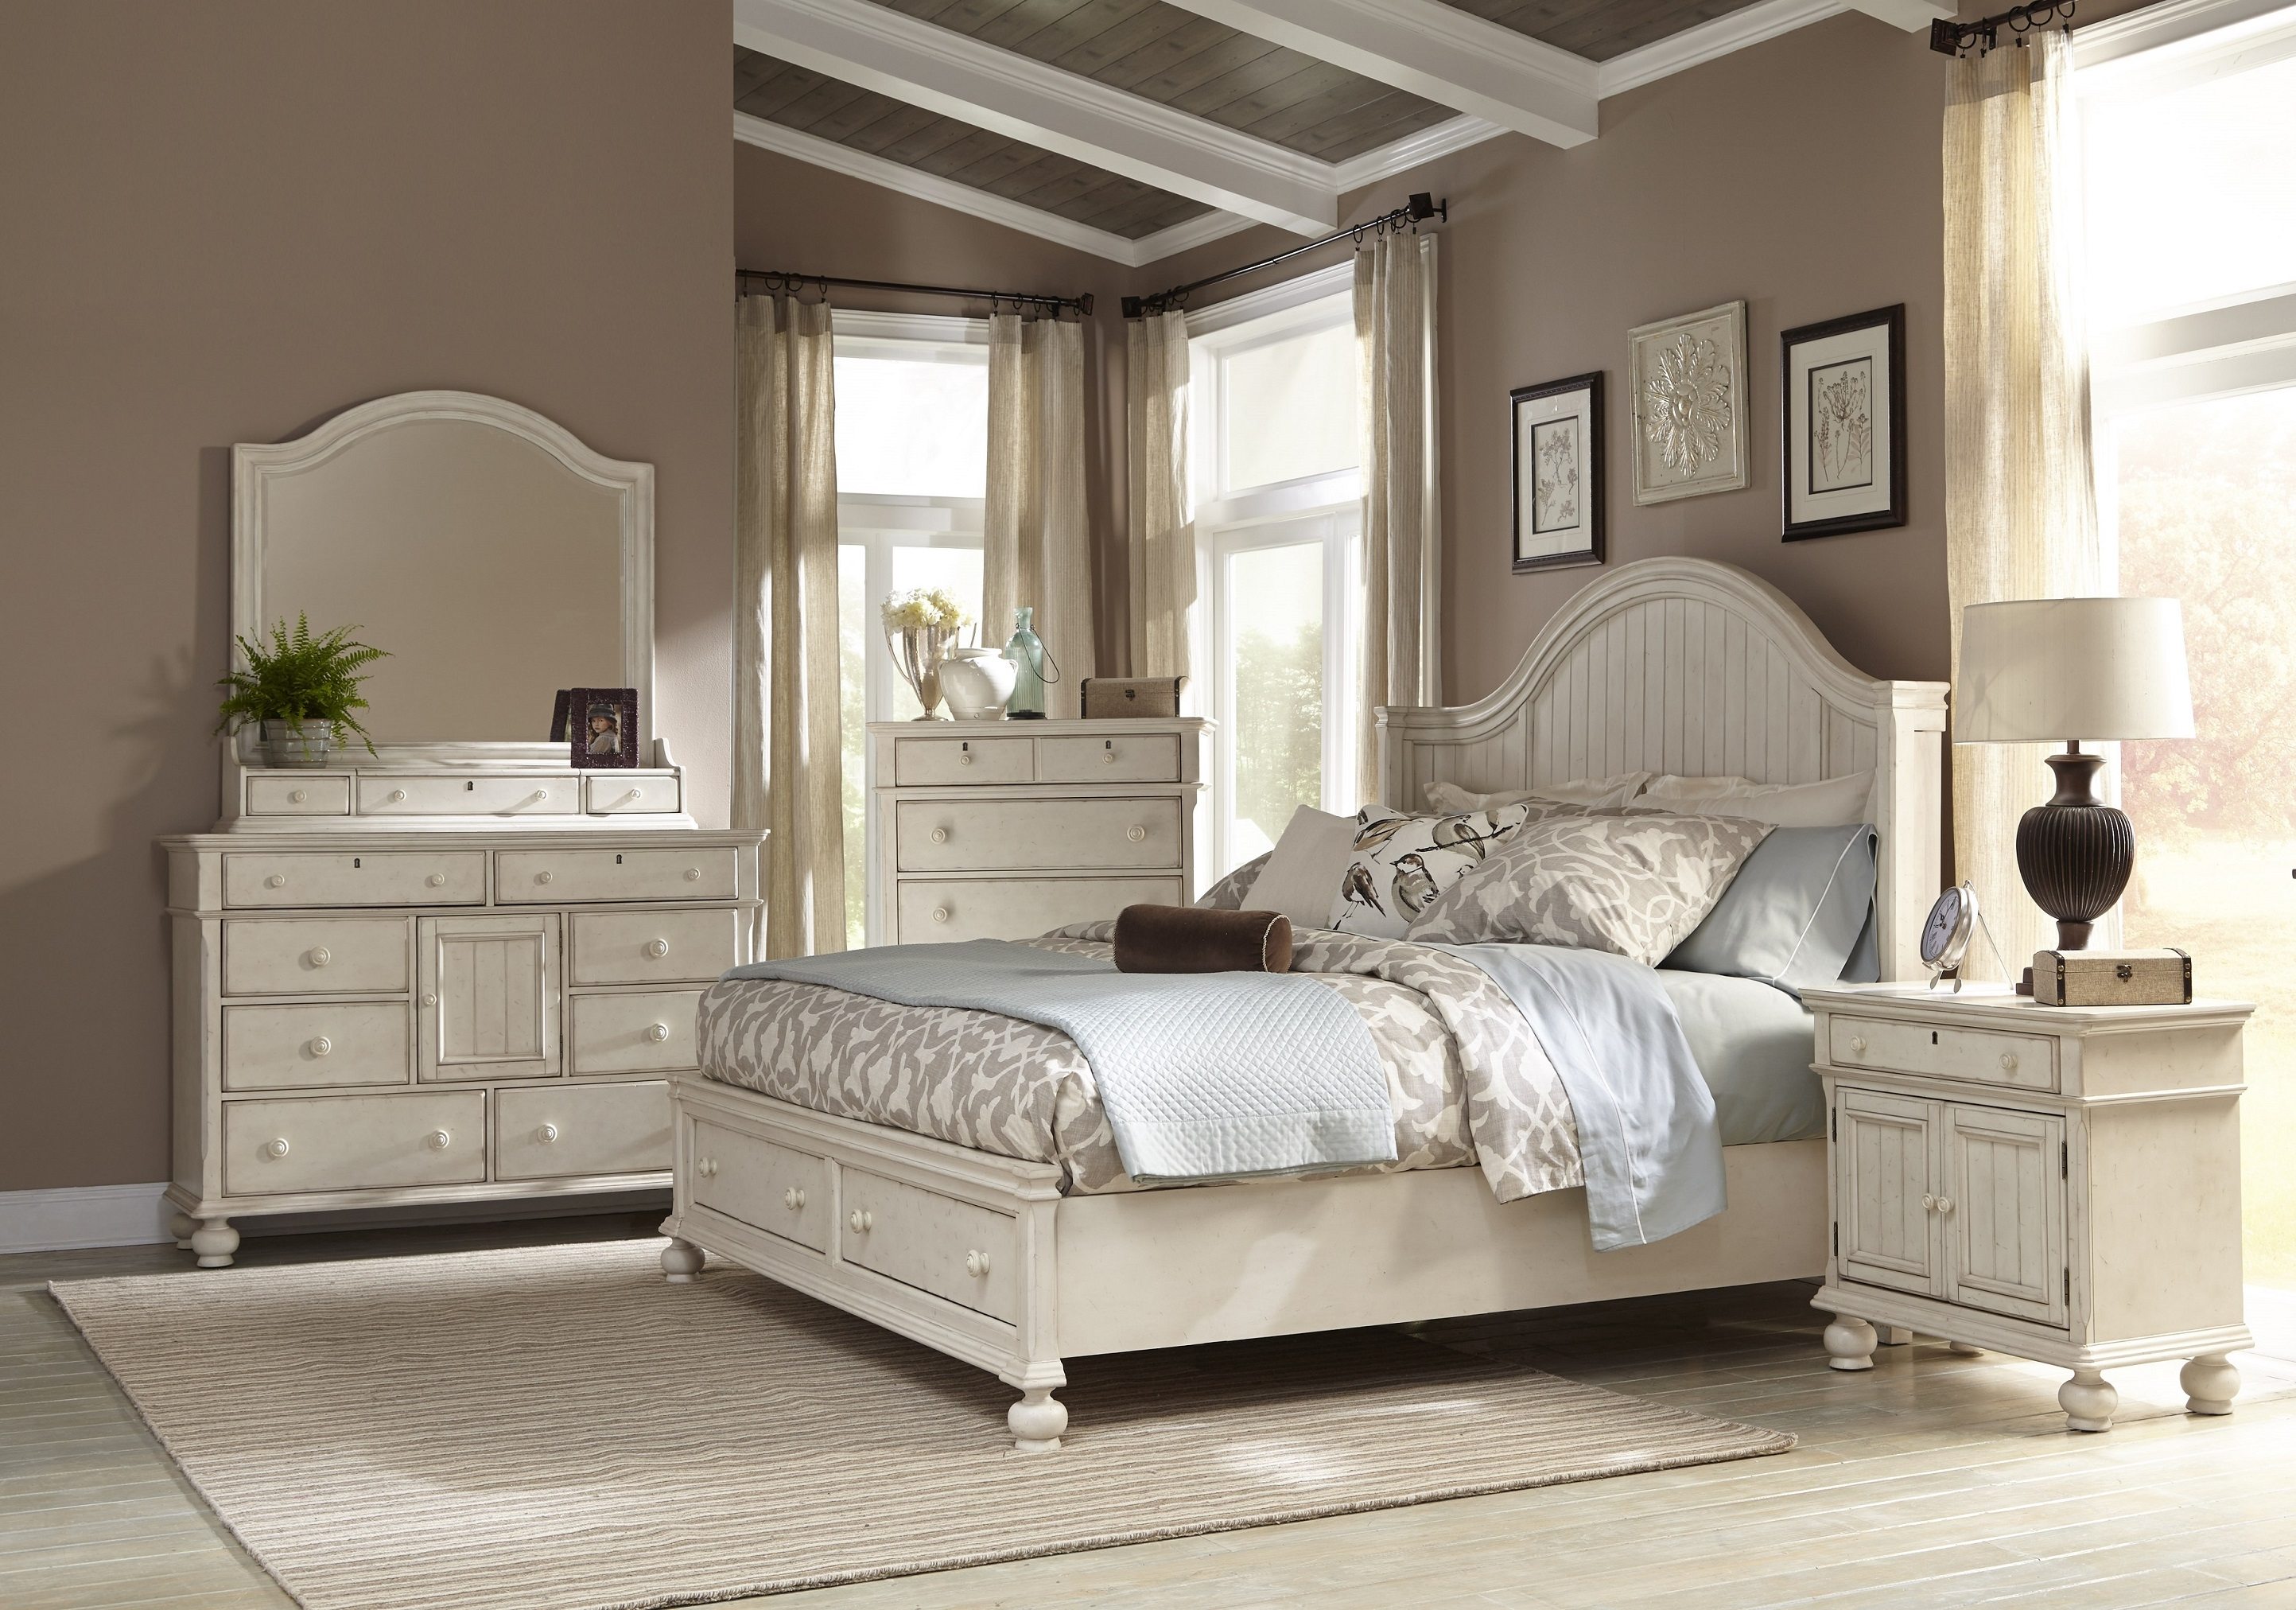 bedroom furniture sets queen size photo - 9